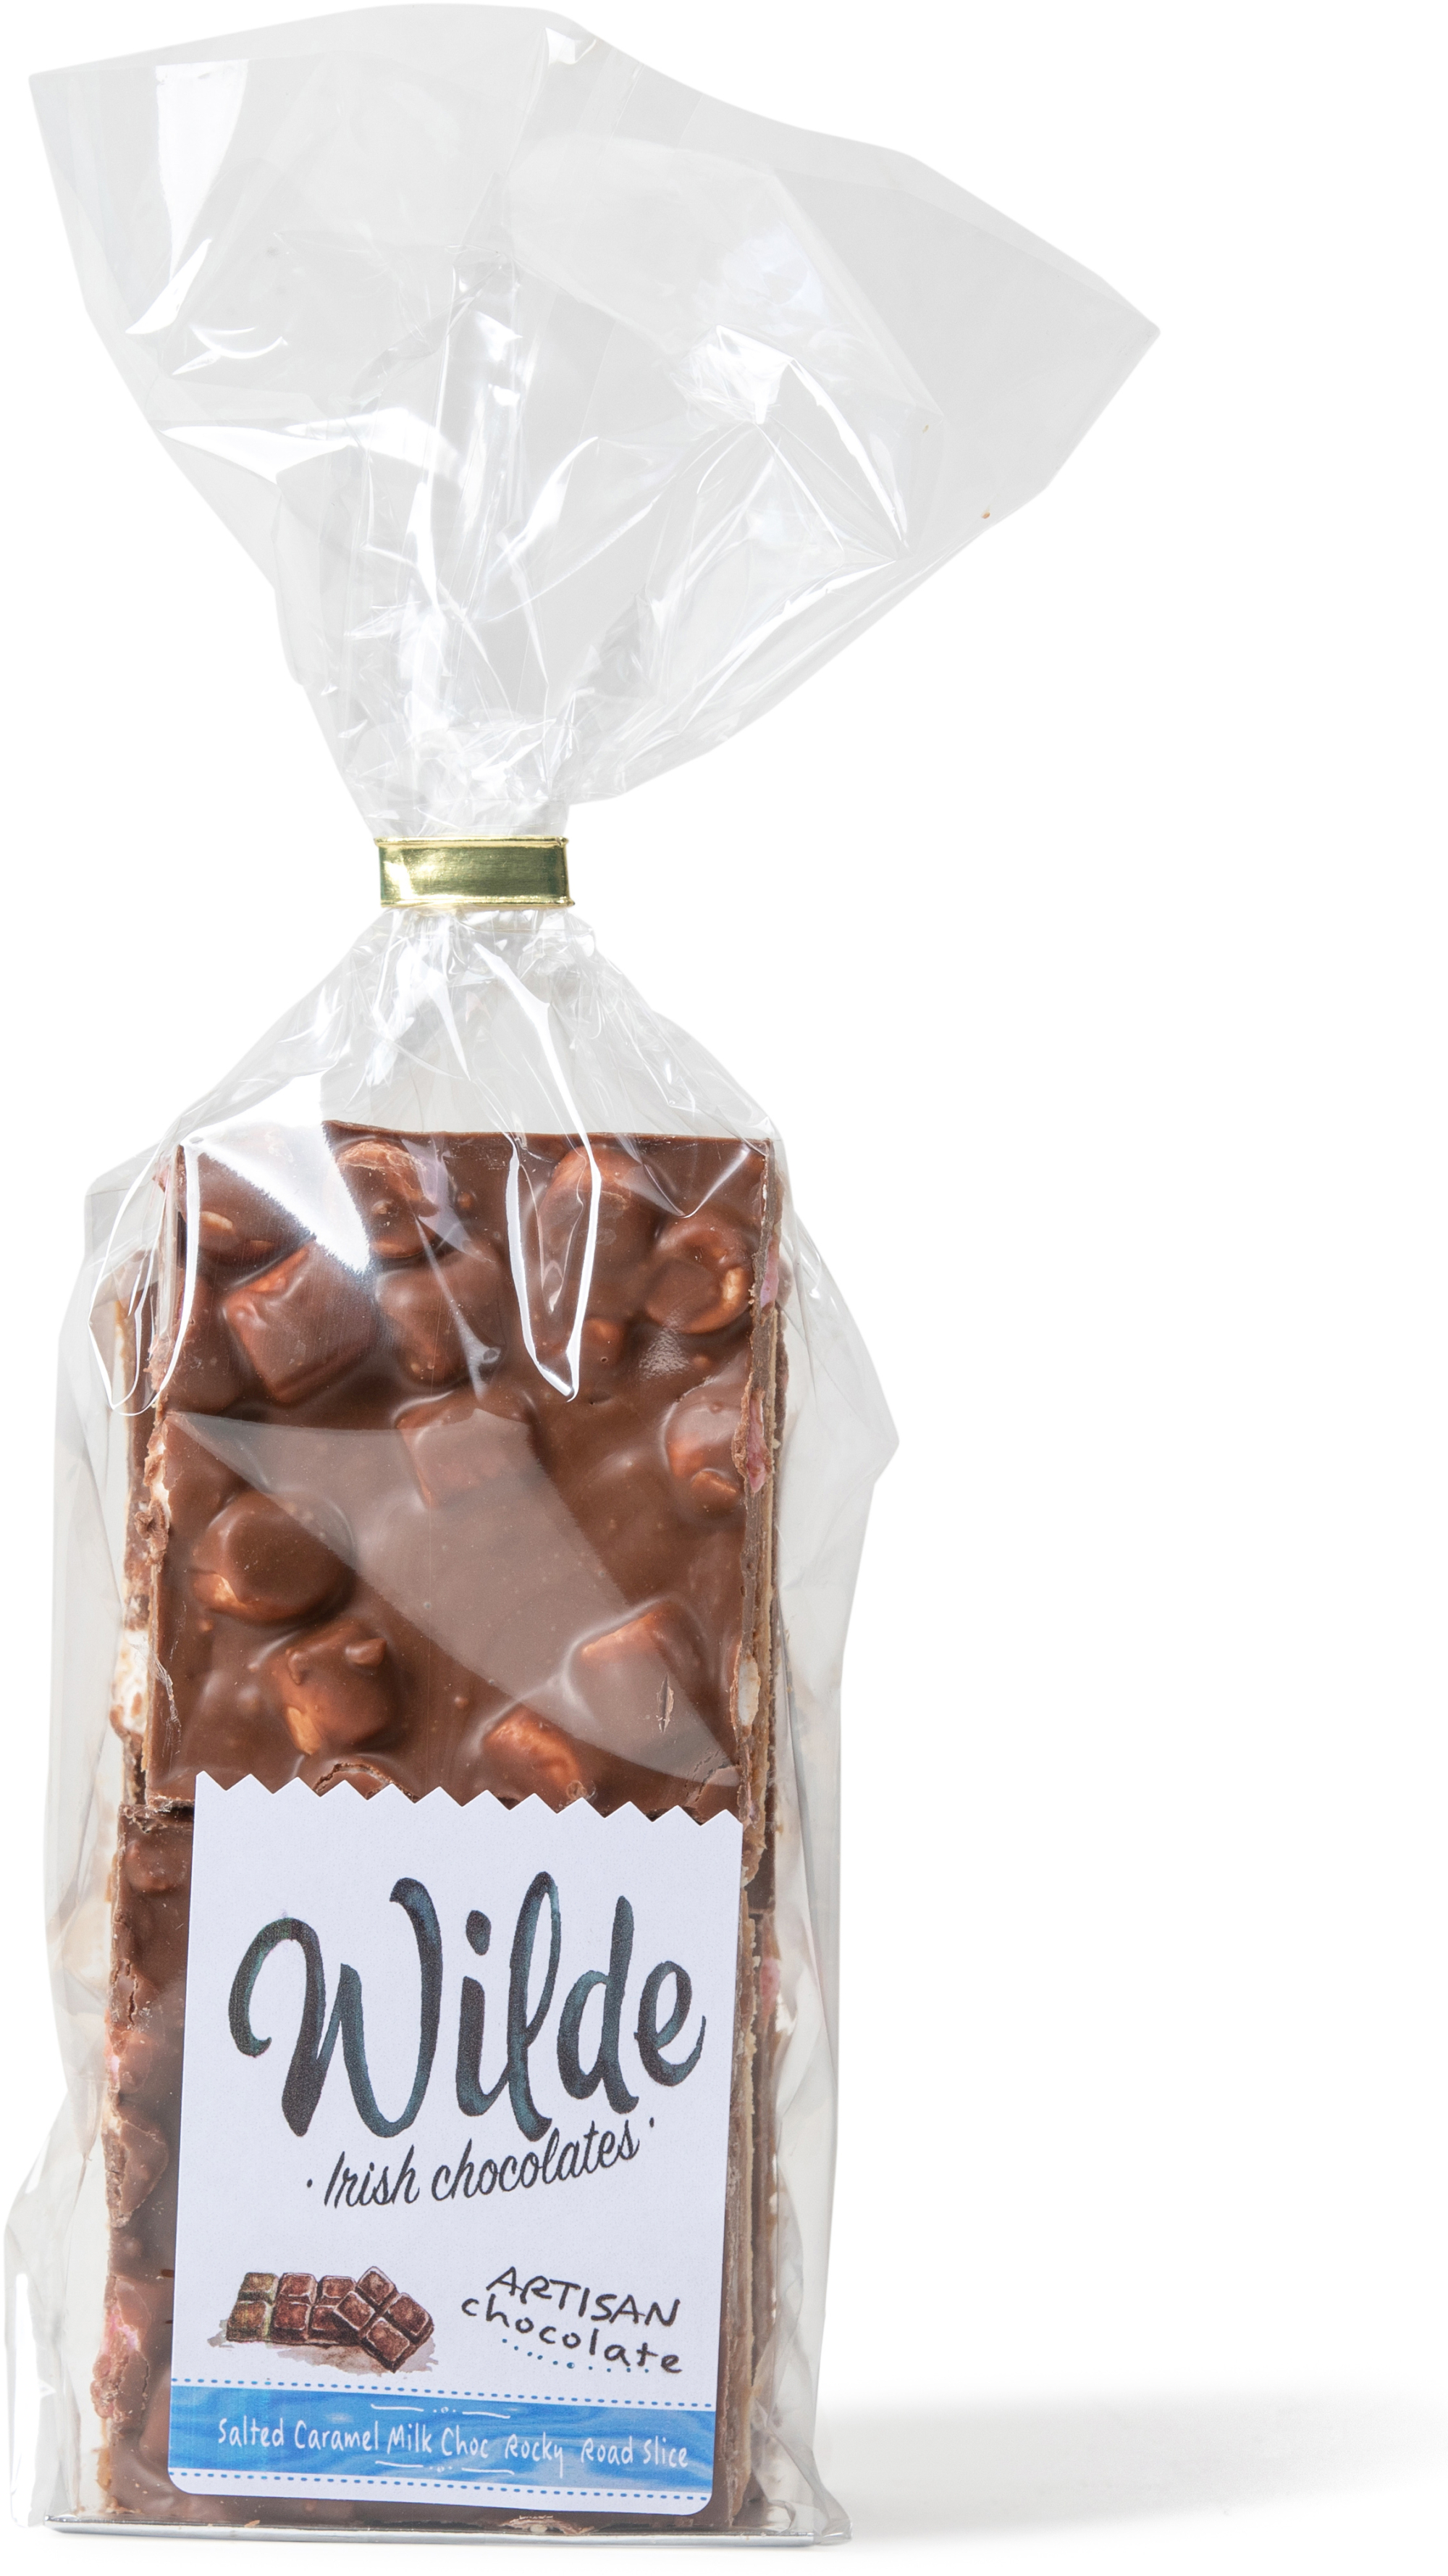 Wilde Irish Chocolates - slice options